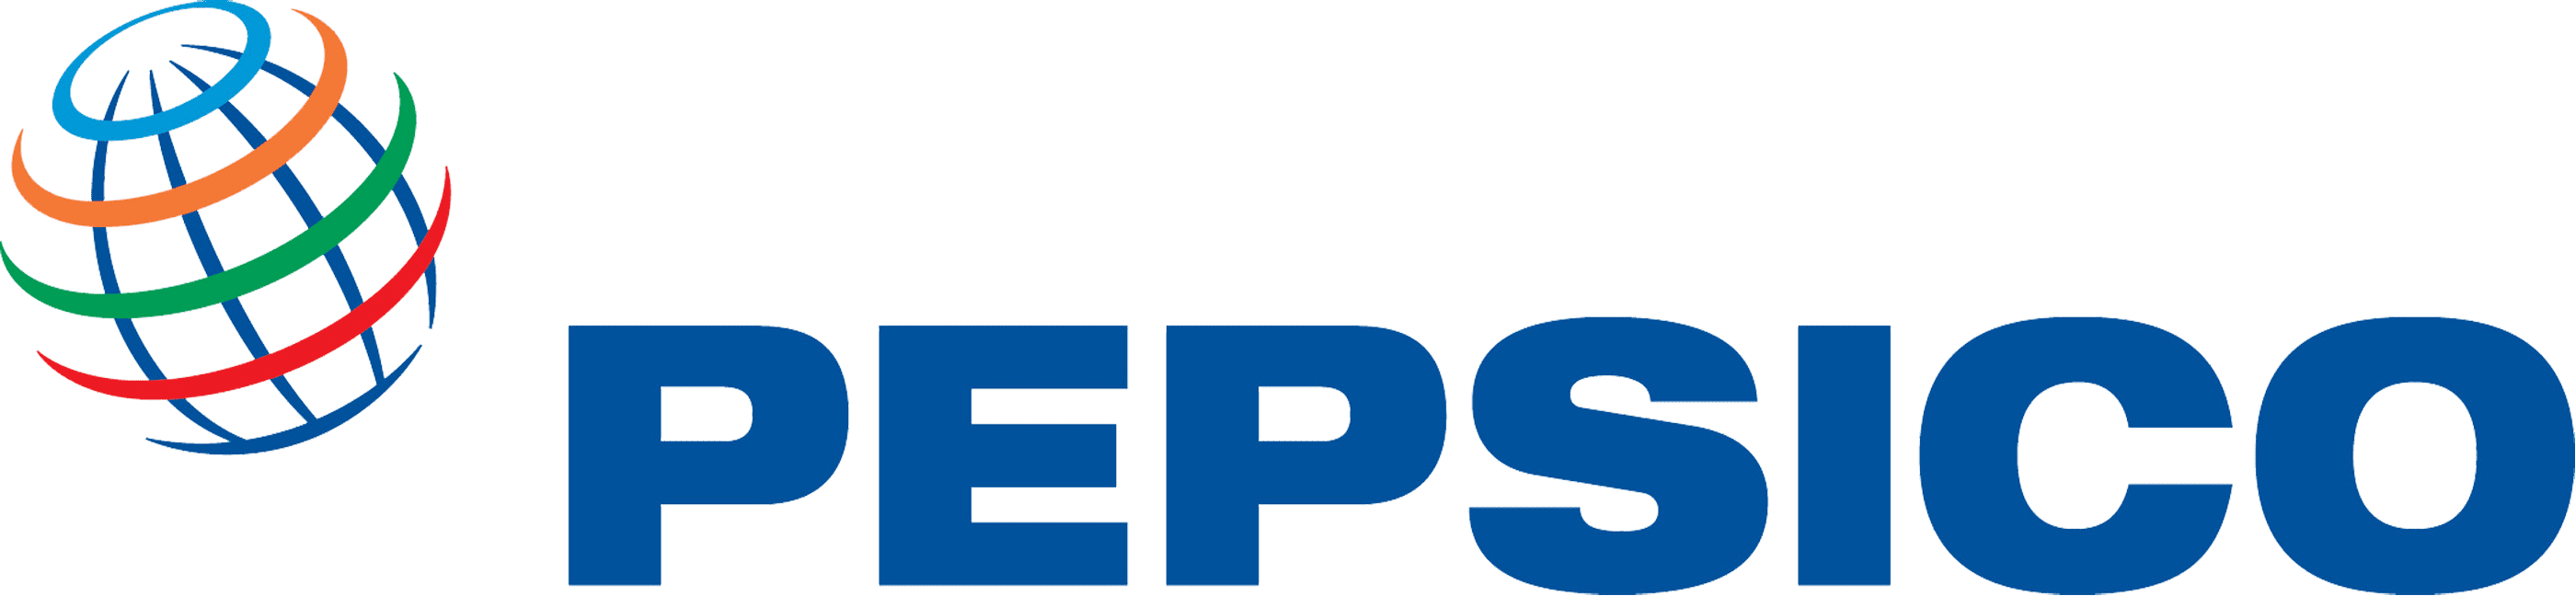 PepsiCo-Logo